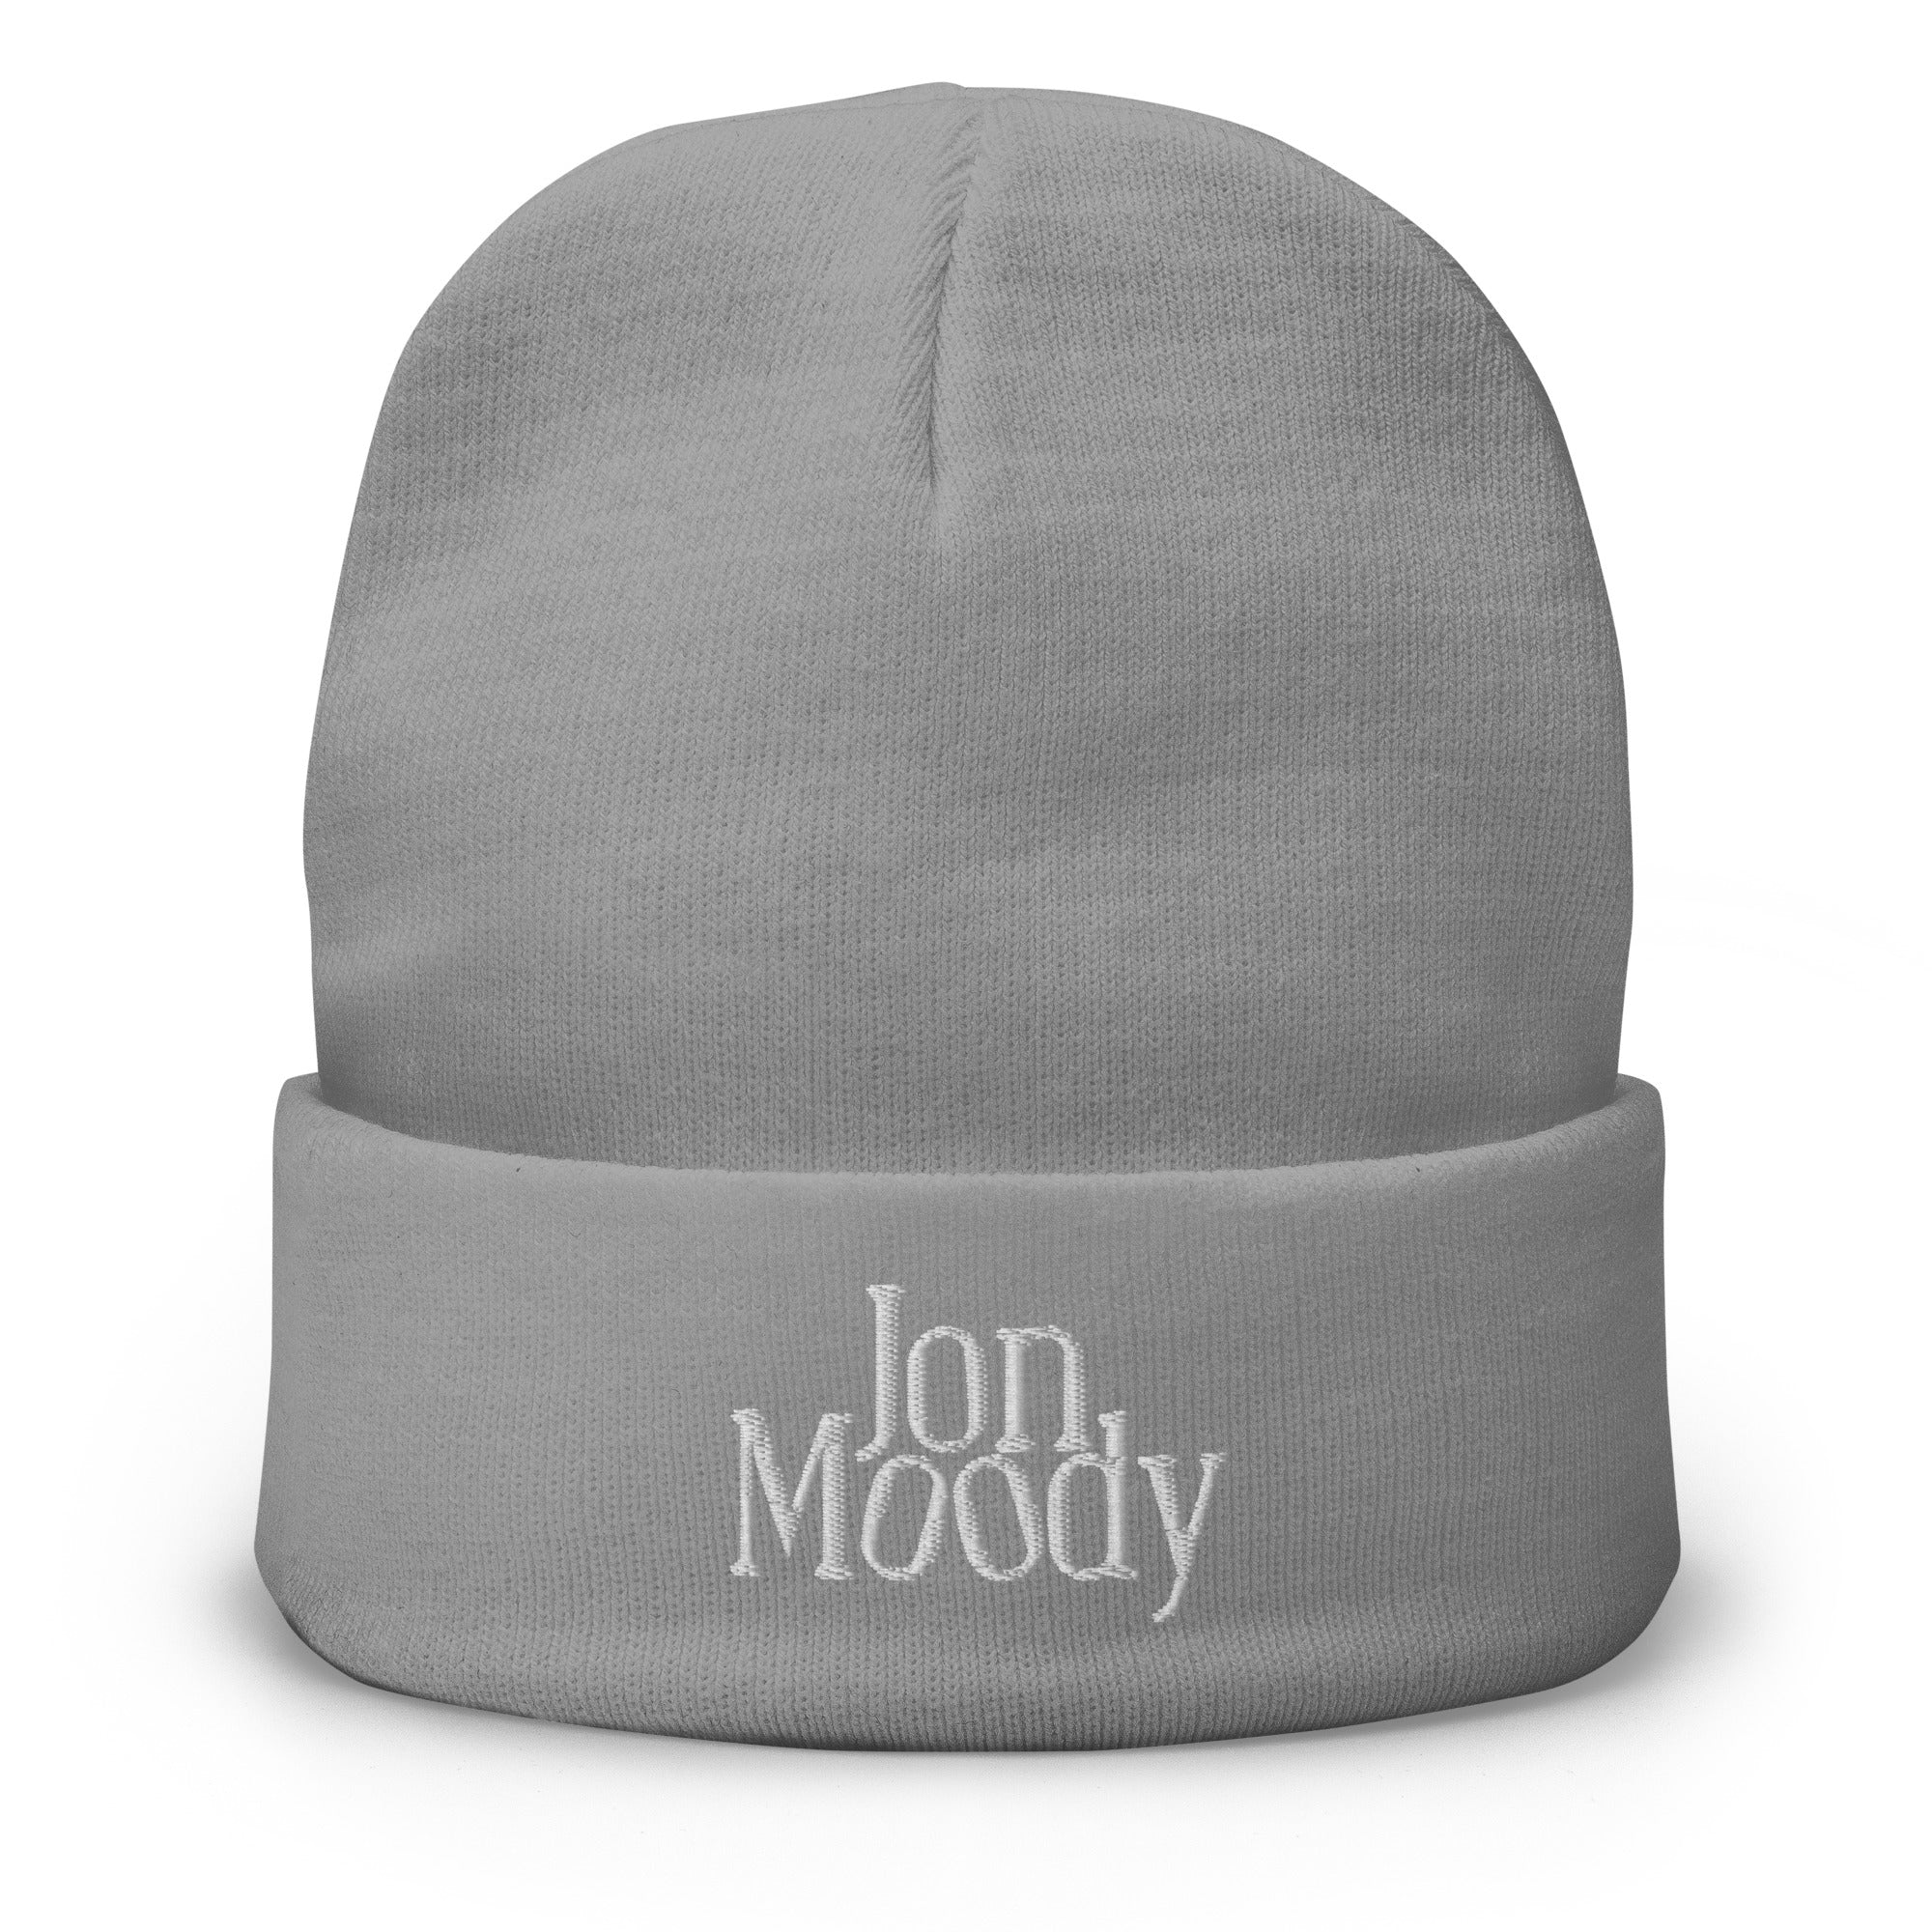 Jon Moody - Embroidered Beanie